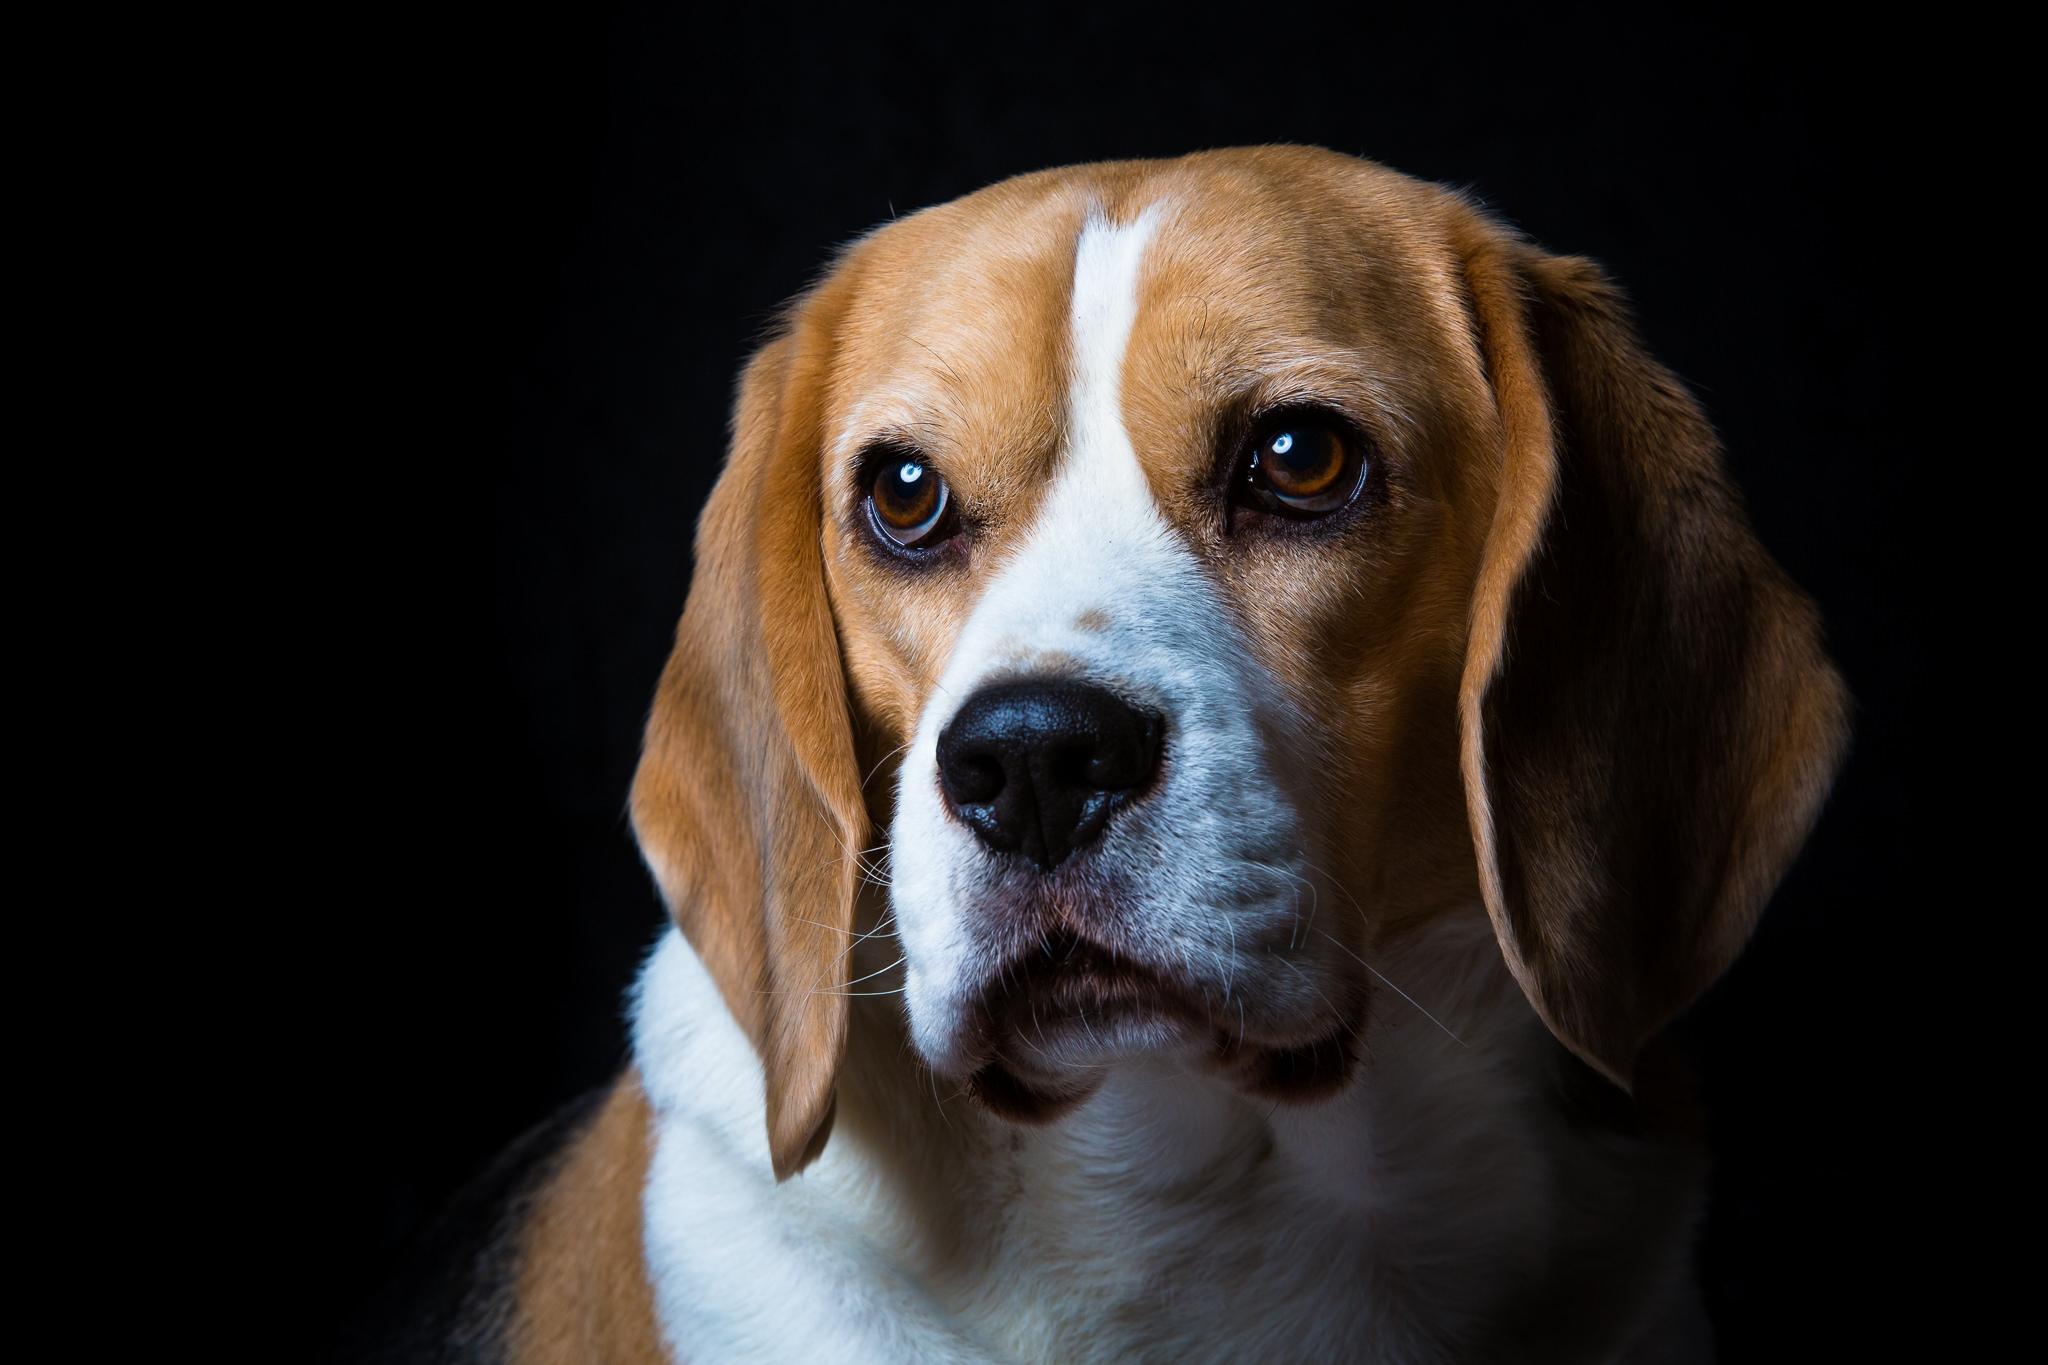 Wallpapers dog beagle animal on the desktop